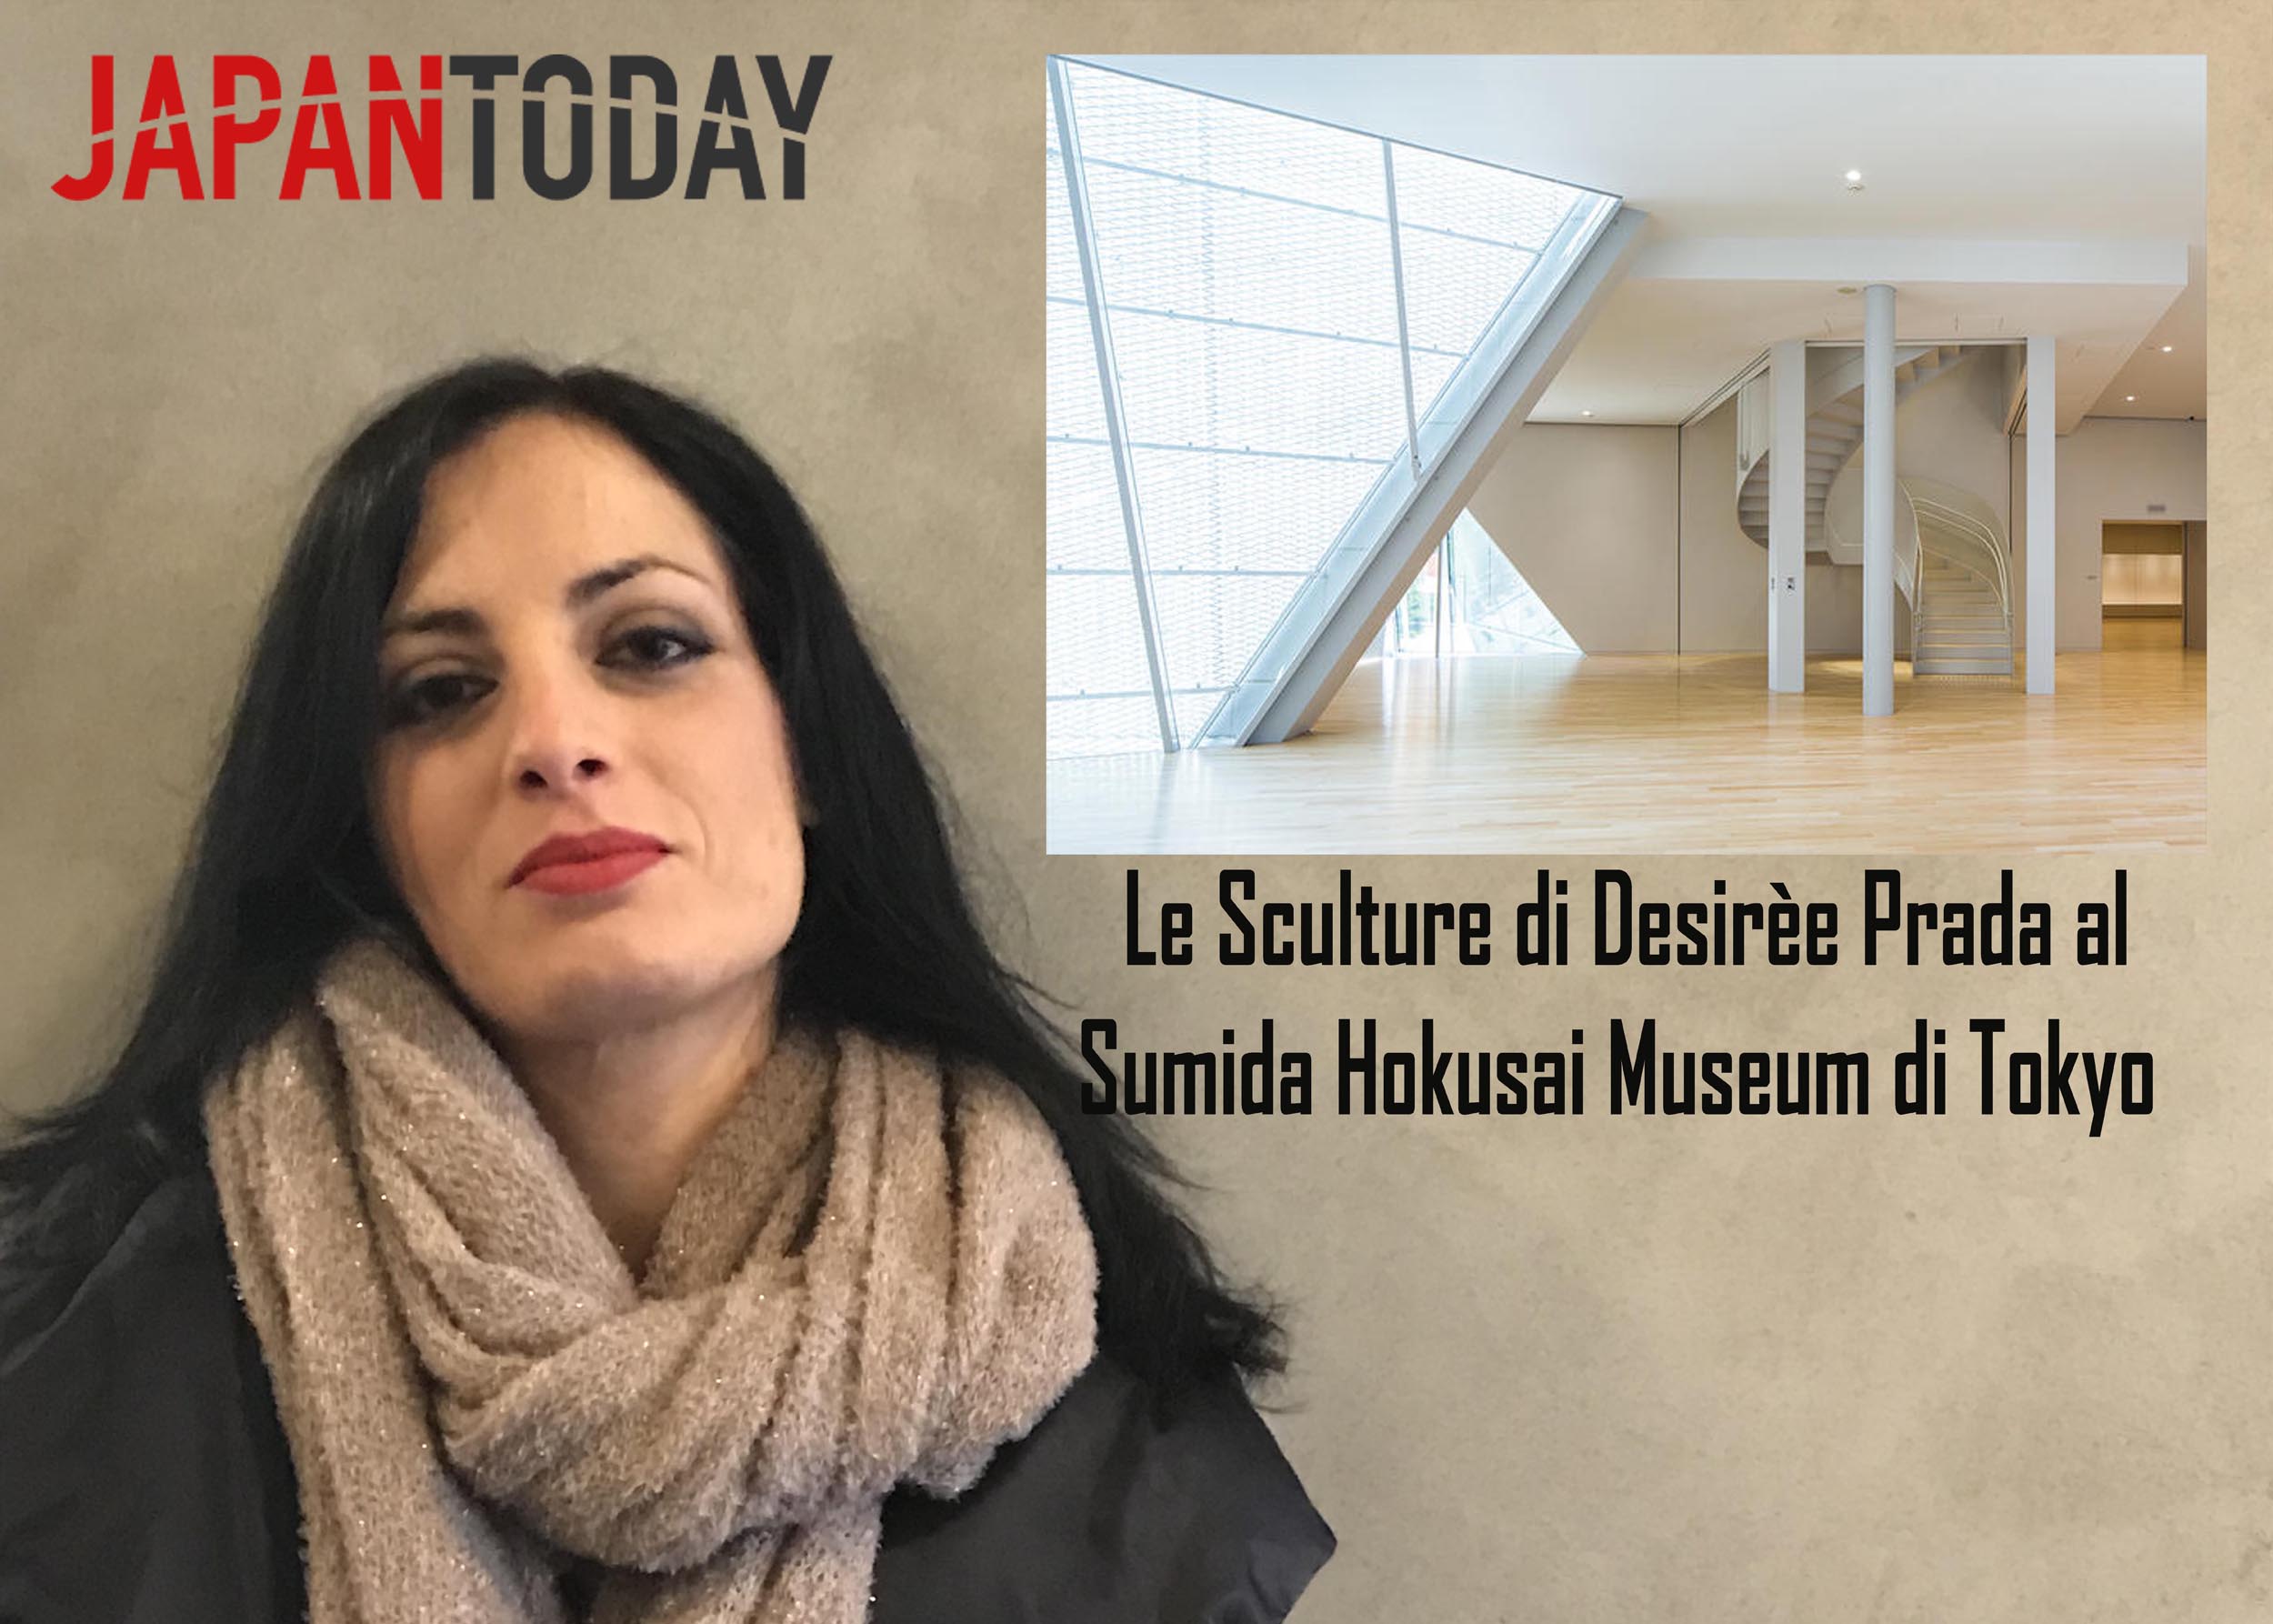 Il nuovo Sumida Hokusai Museum ospita i calchi dell'artista italiana Desirèe Prada